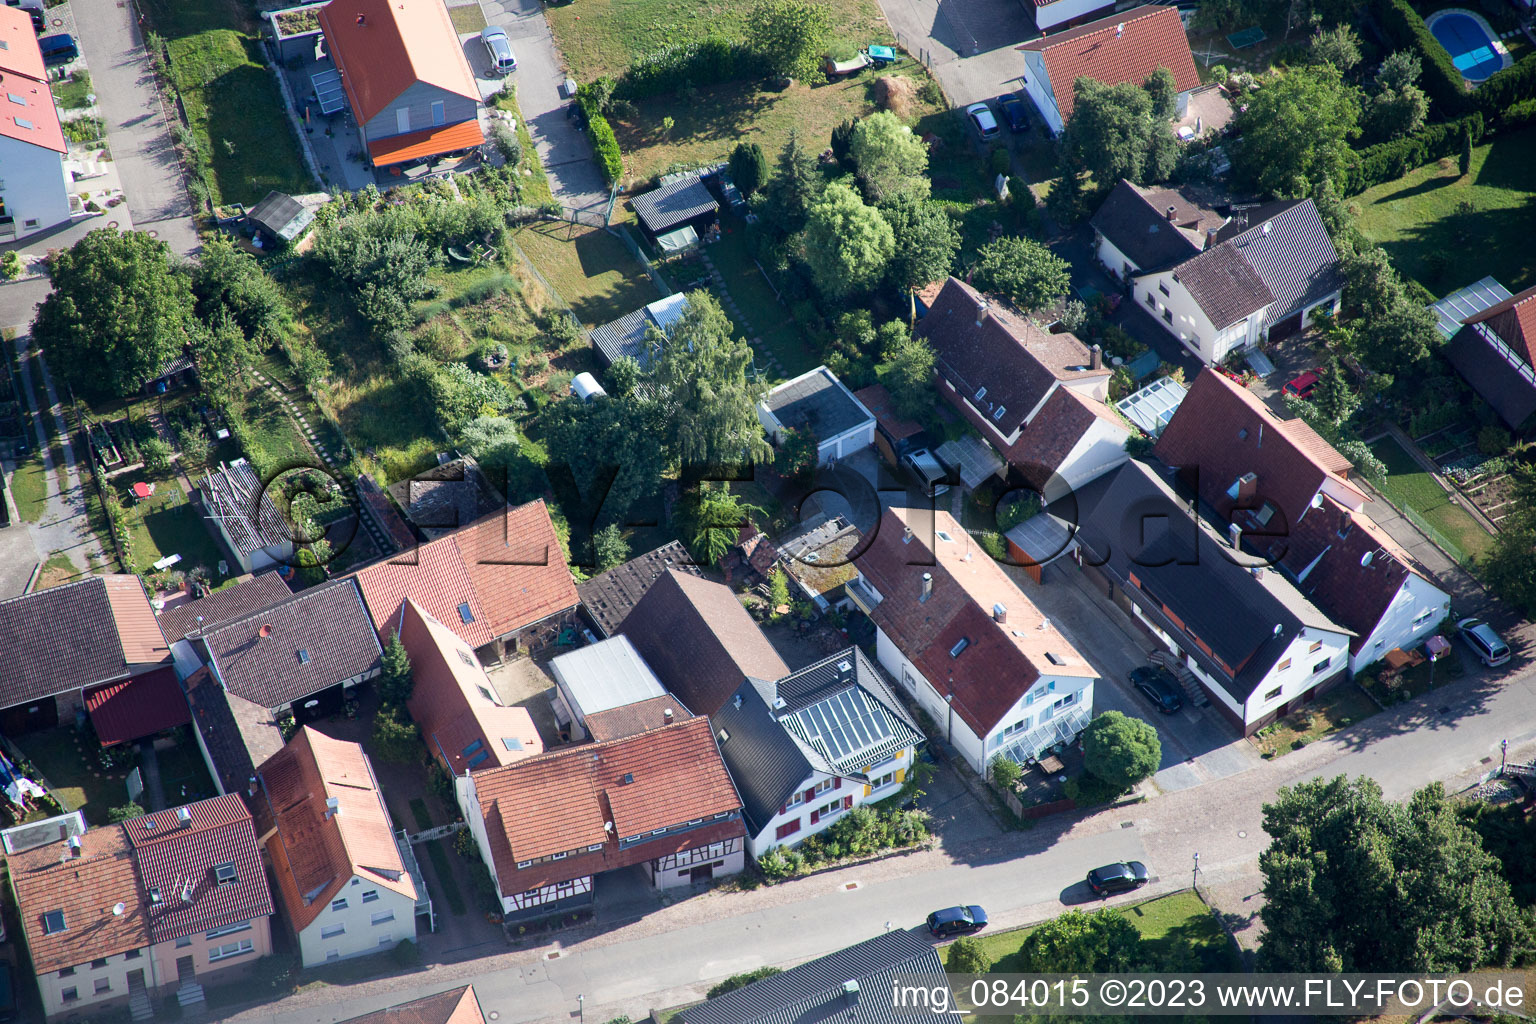 Drone recording of District Schluttenbach in Ettlingen in the state Baden-Wuerttemberg, Germany